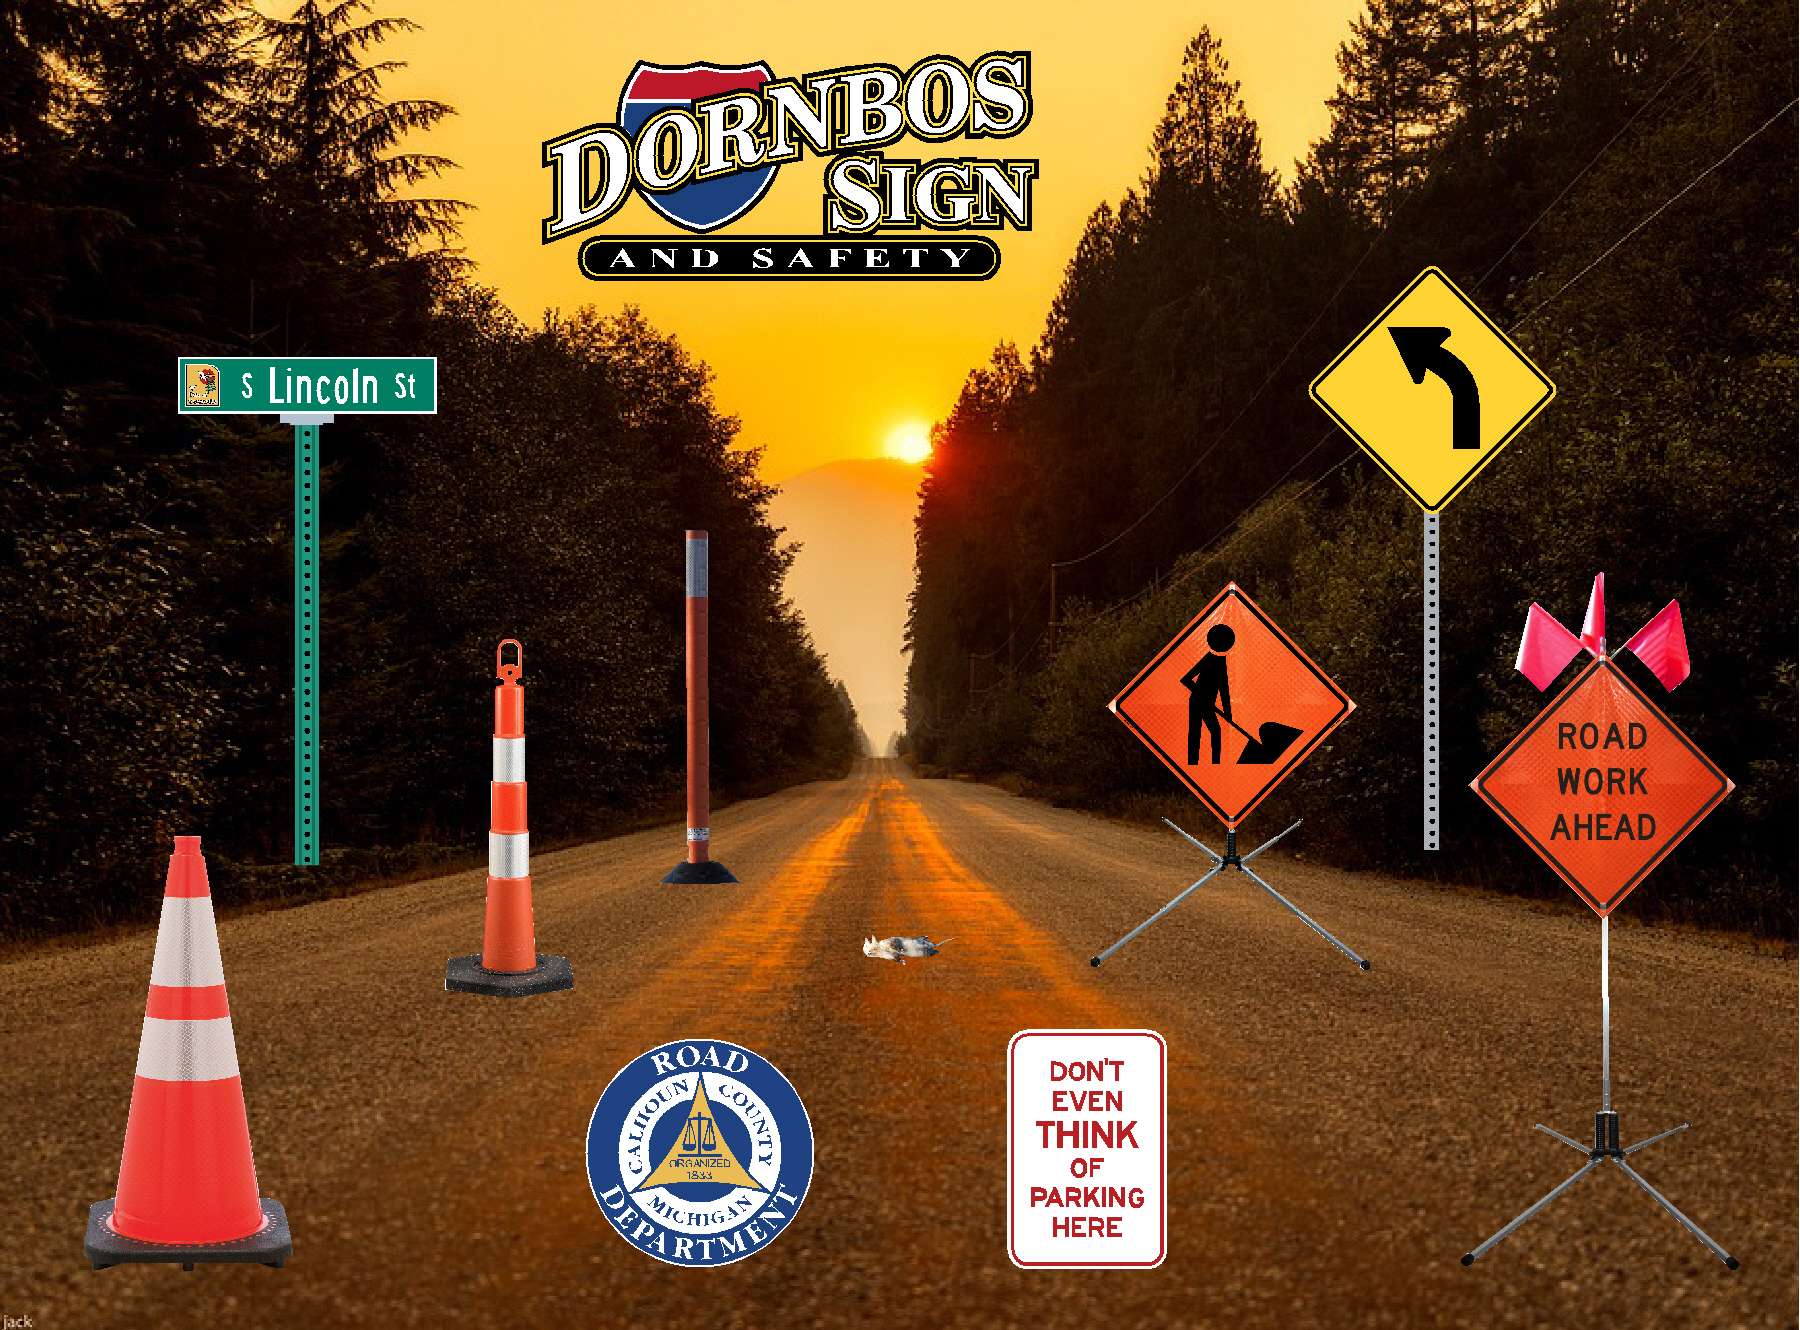 various Donbos signs